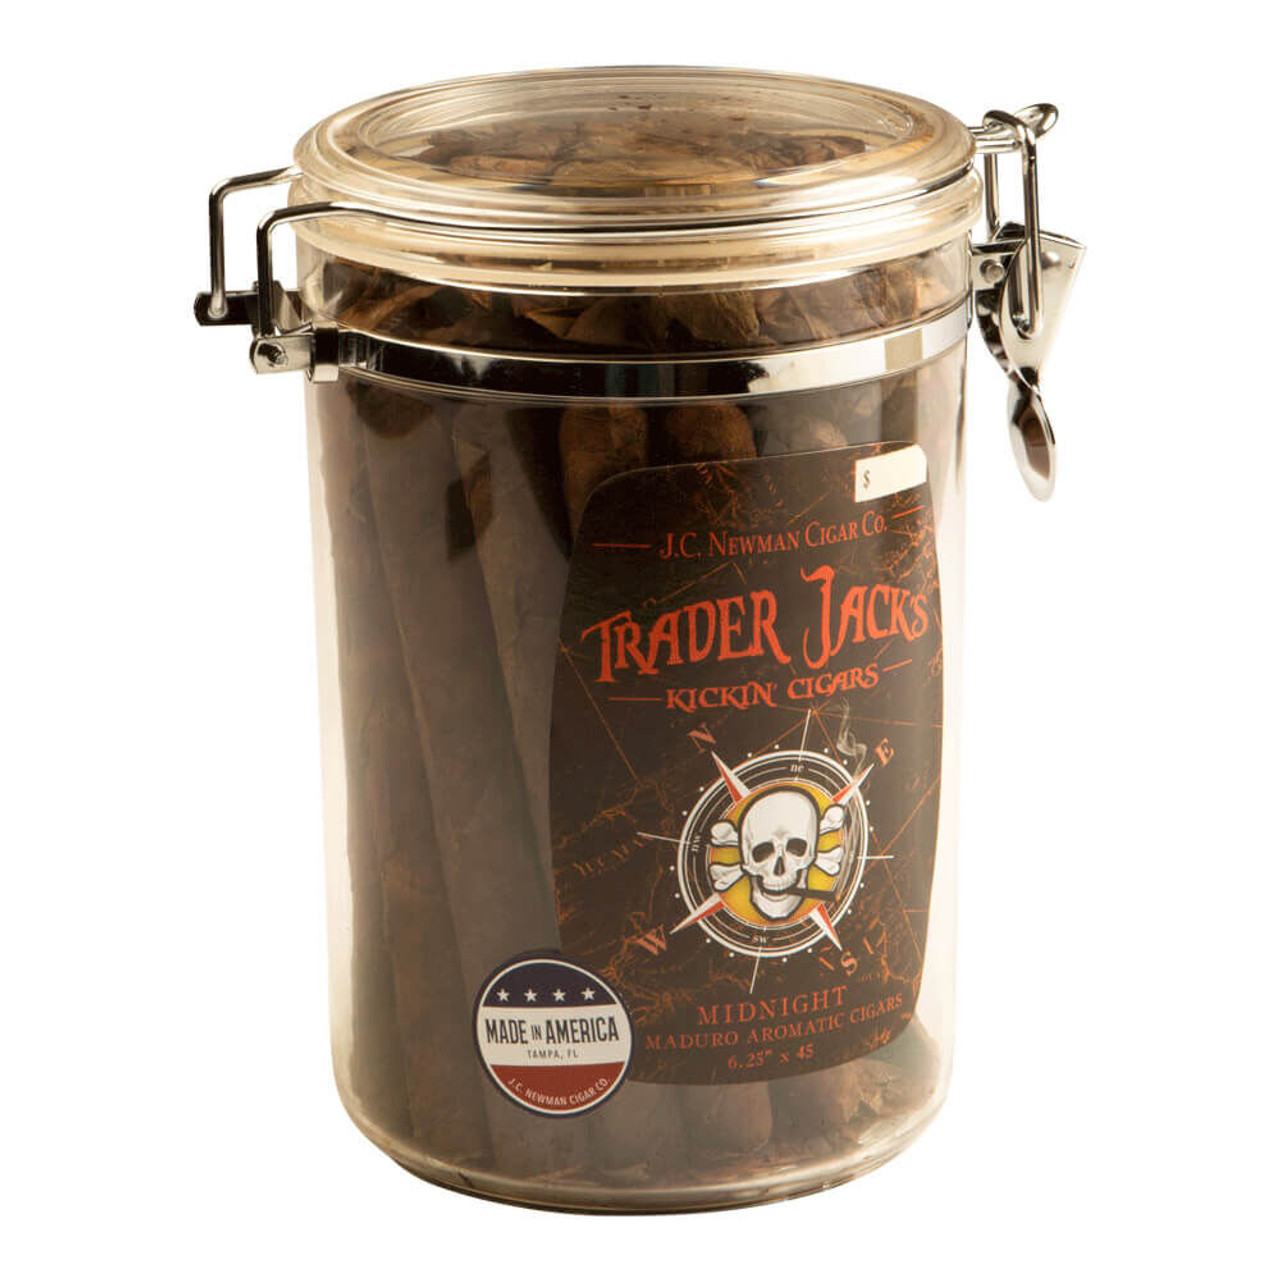 Trader Jack's Kickin' Cigars Midnight Humidor Canister Cigars - 6.25 x 45 (Humi-Jar of 30) *Box